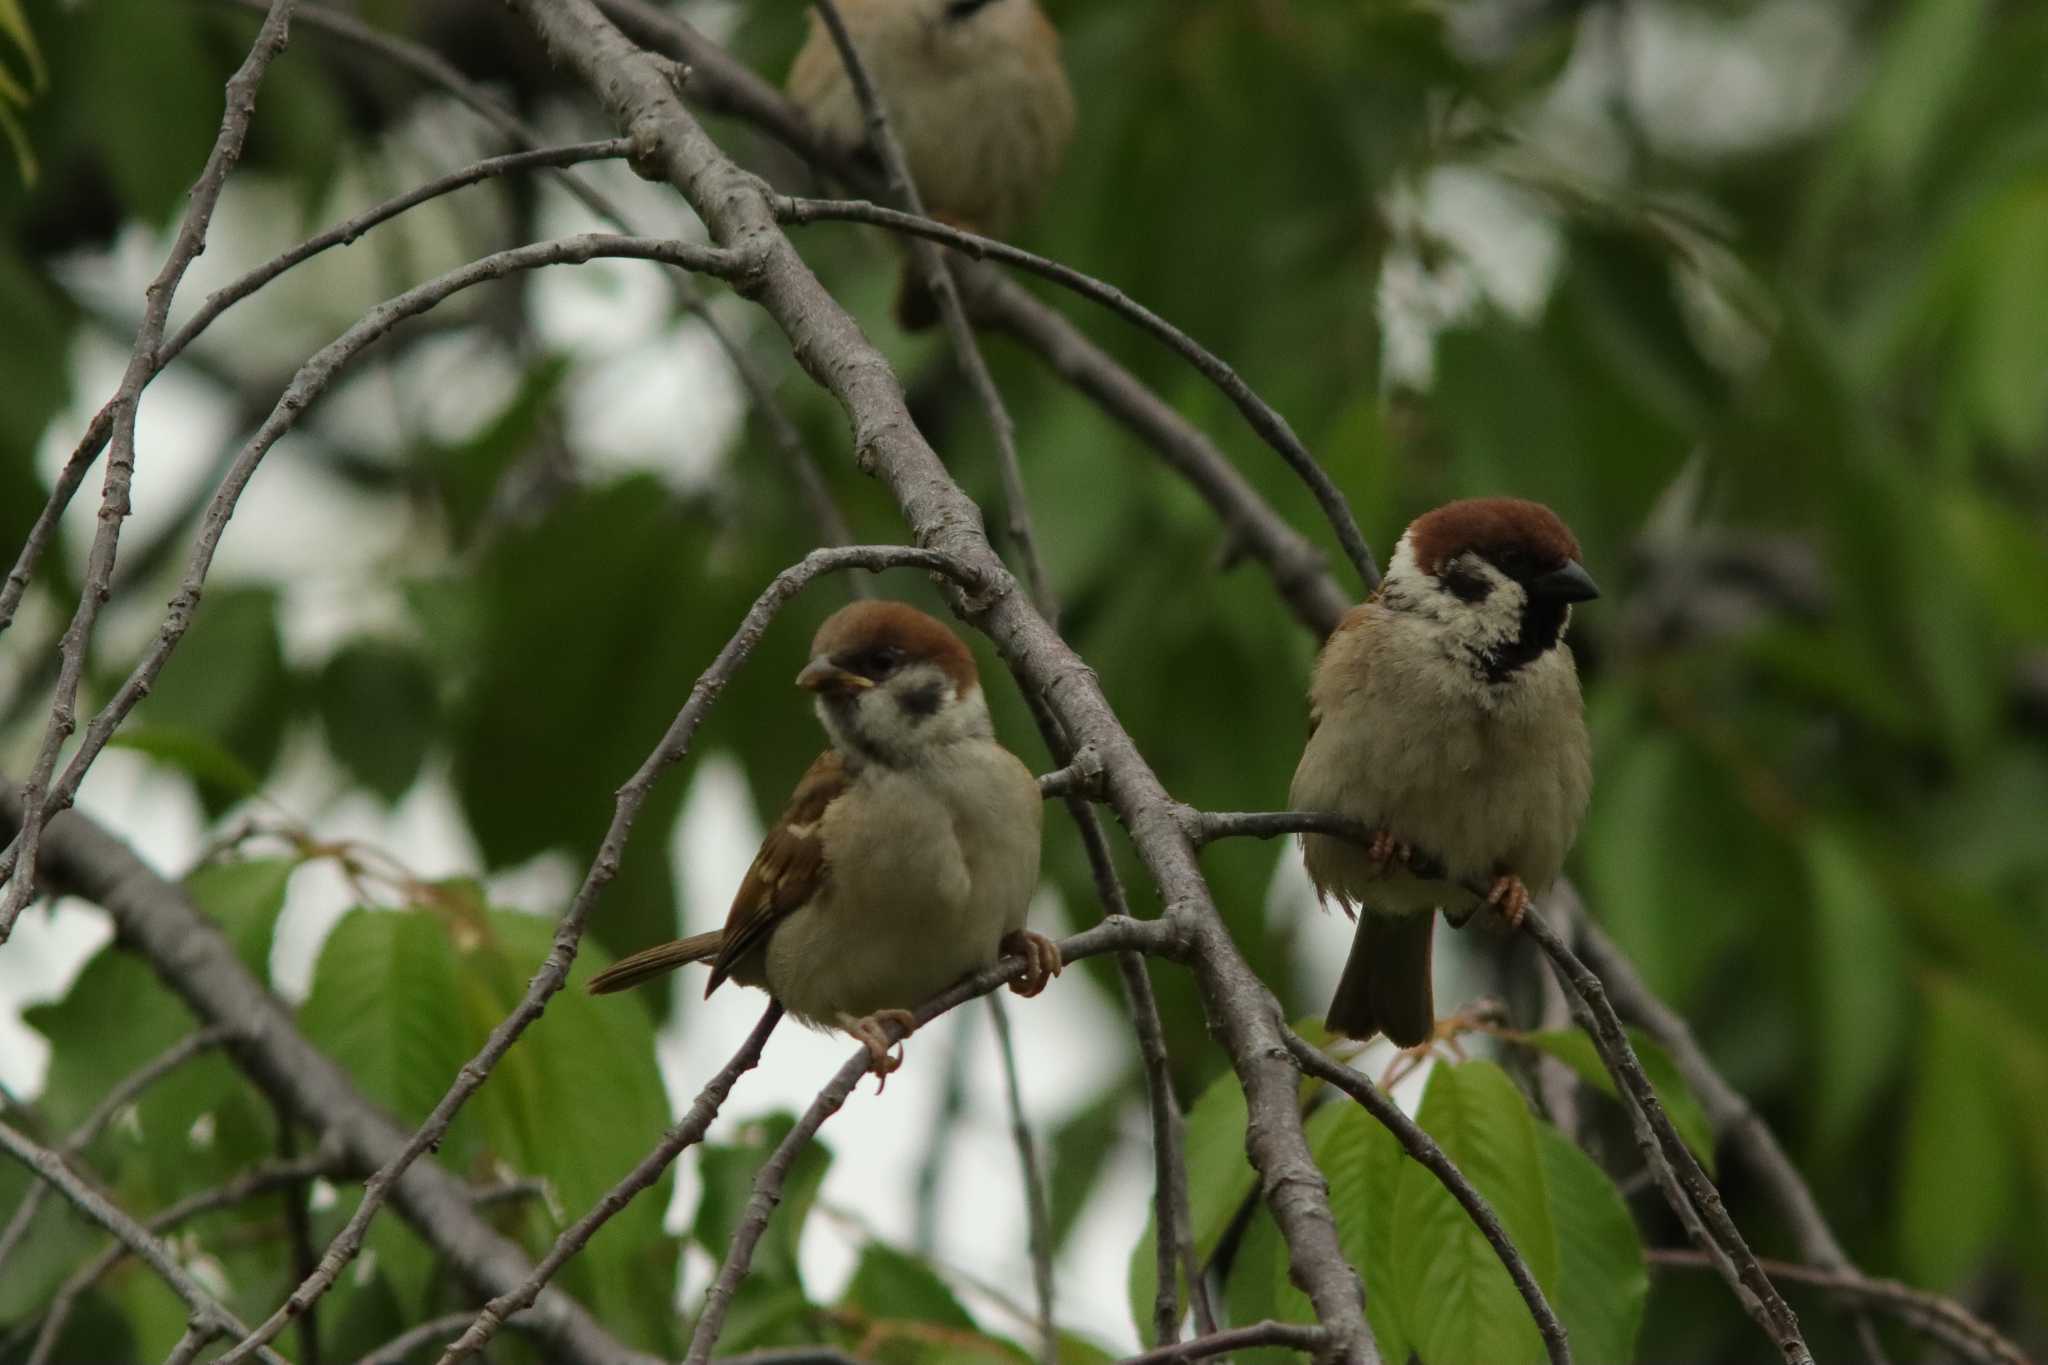 Photo of Eurasian Tree Sparrow at Osaka castle park by 蕾@sourai0443